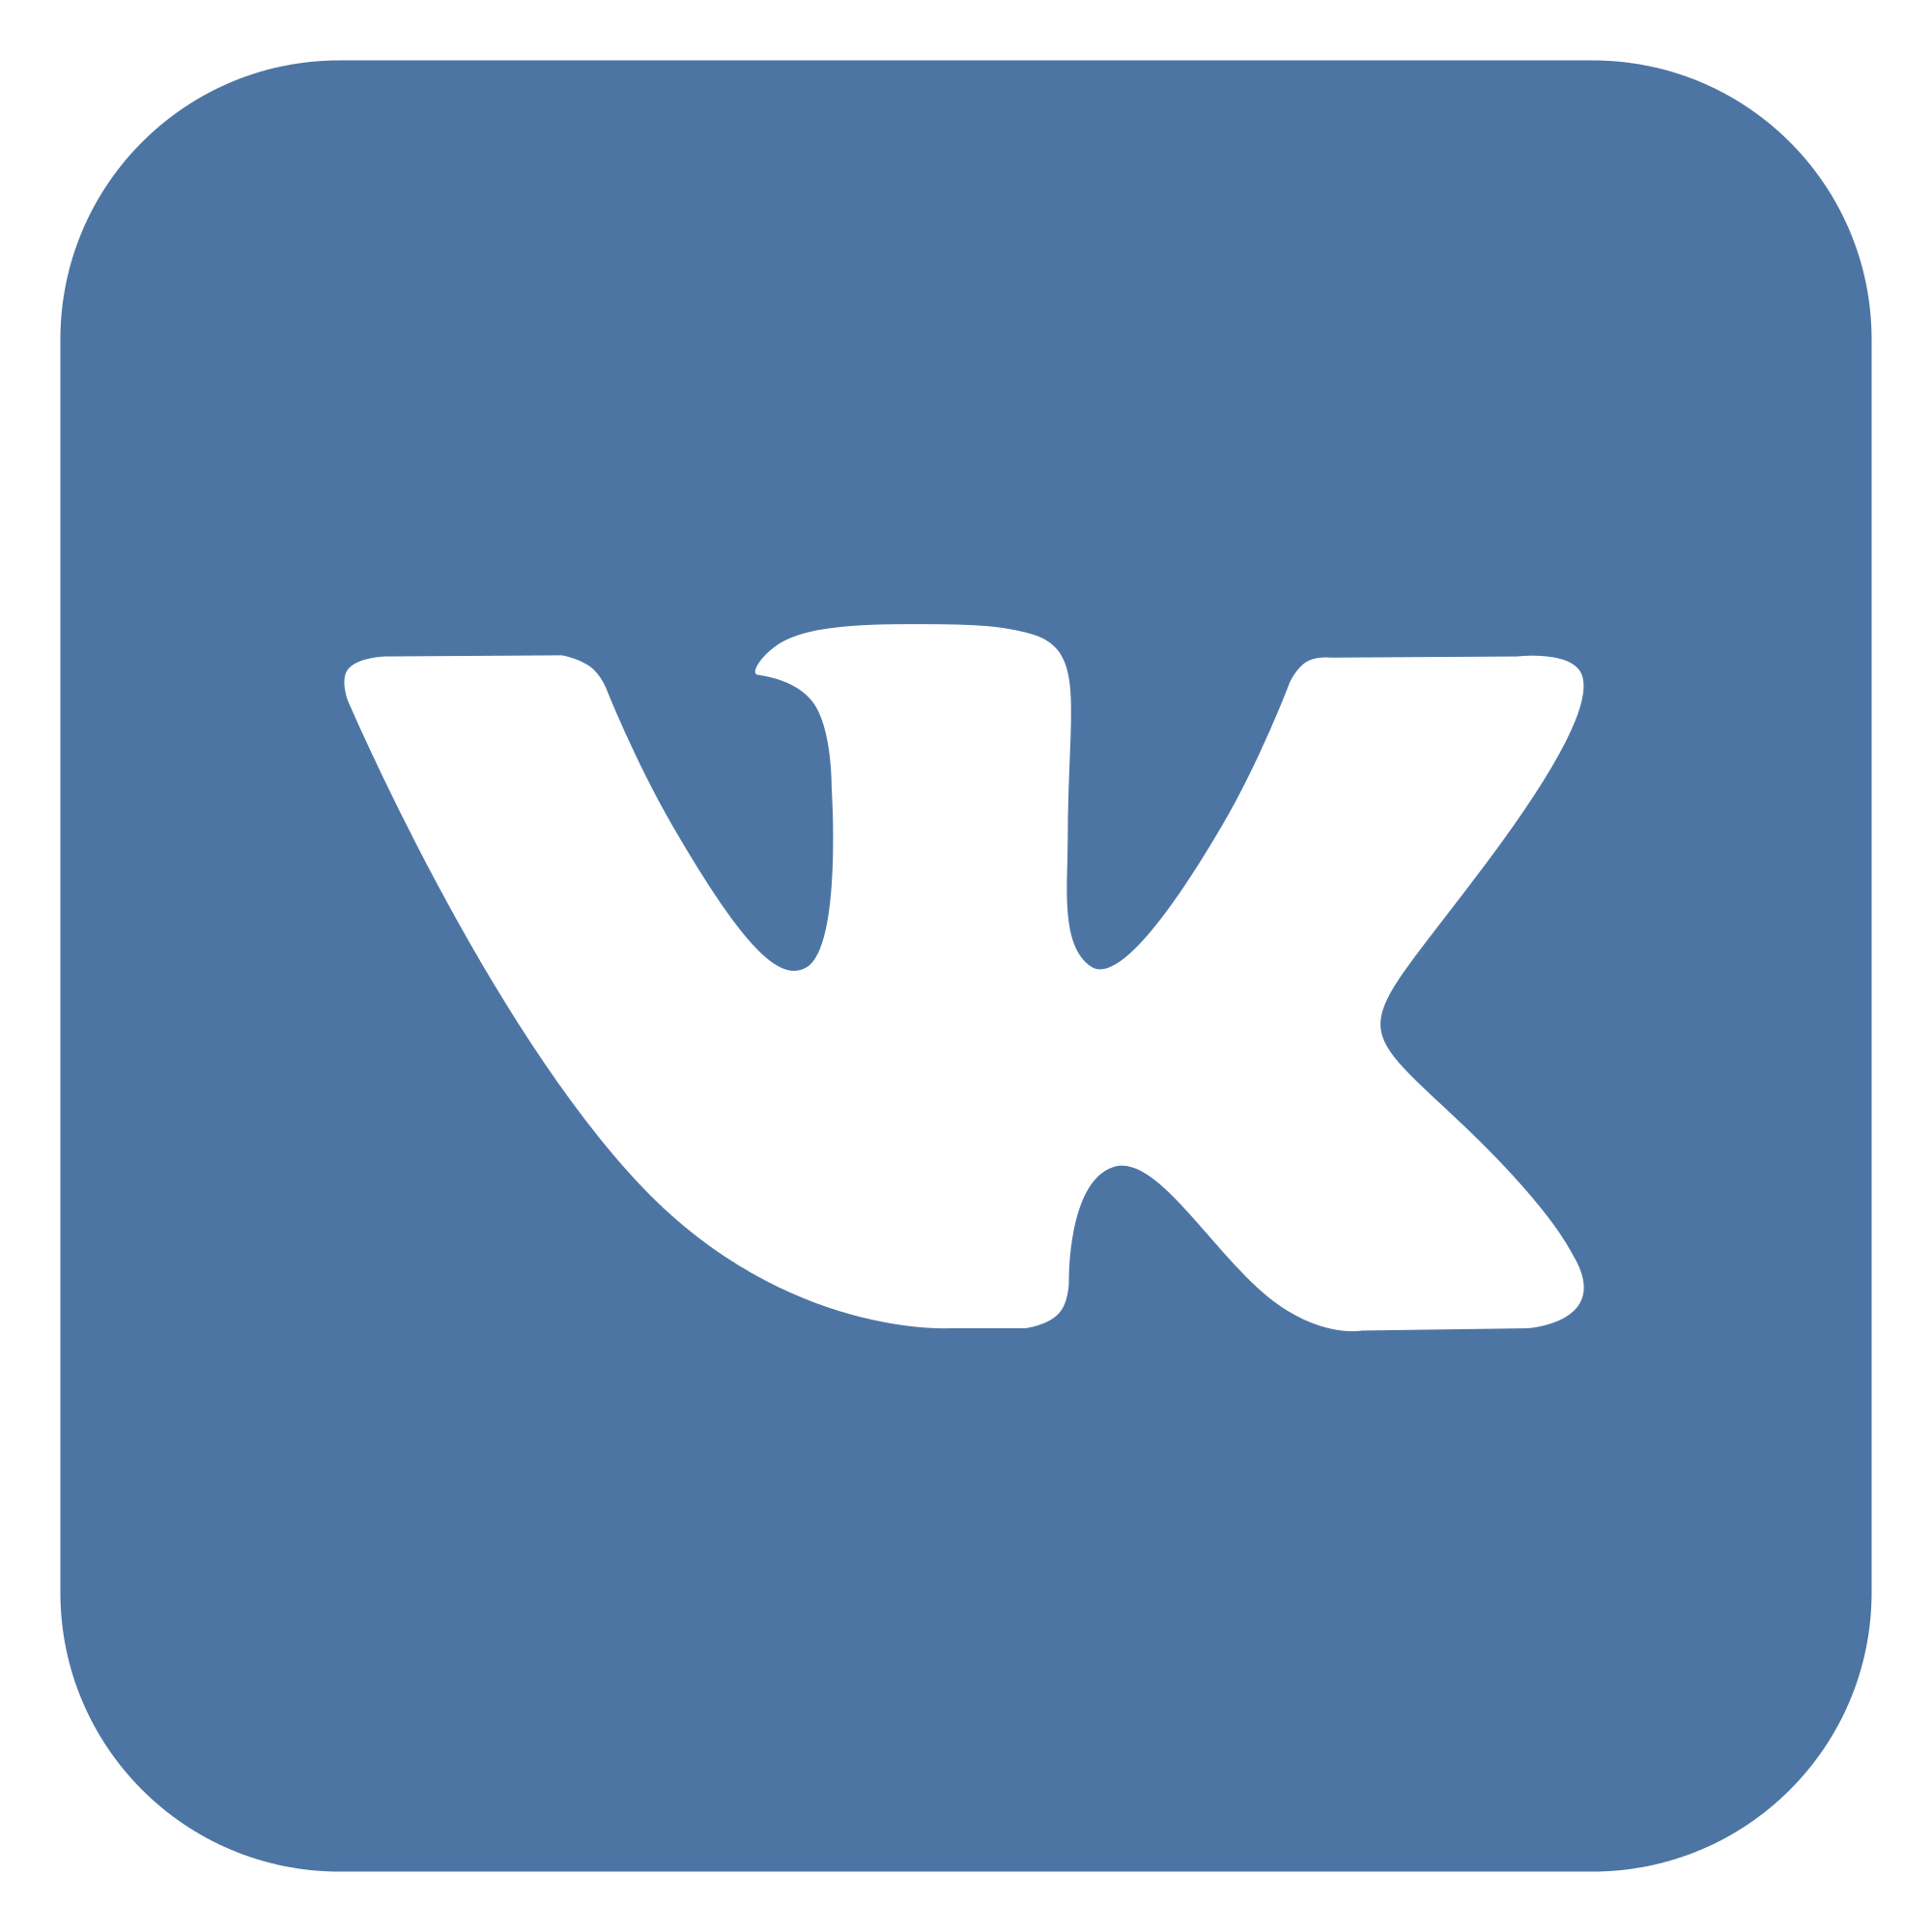 VK - Free social media icons